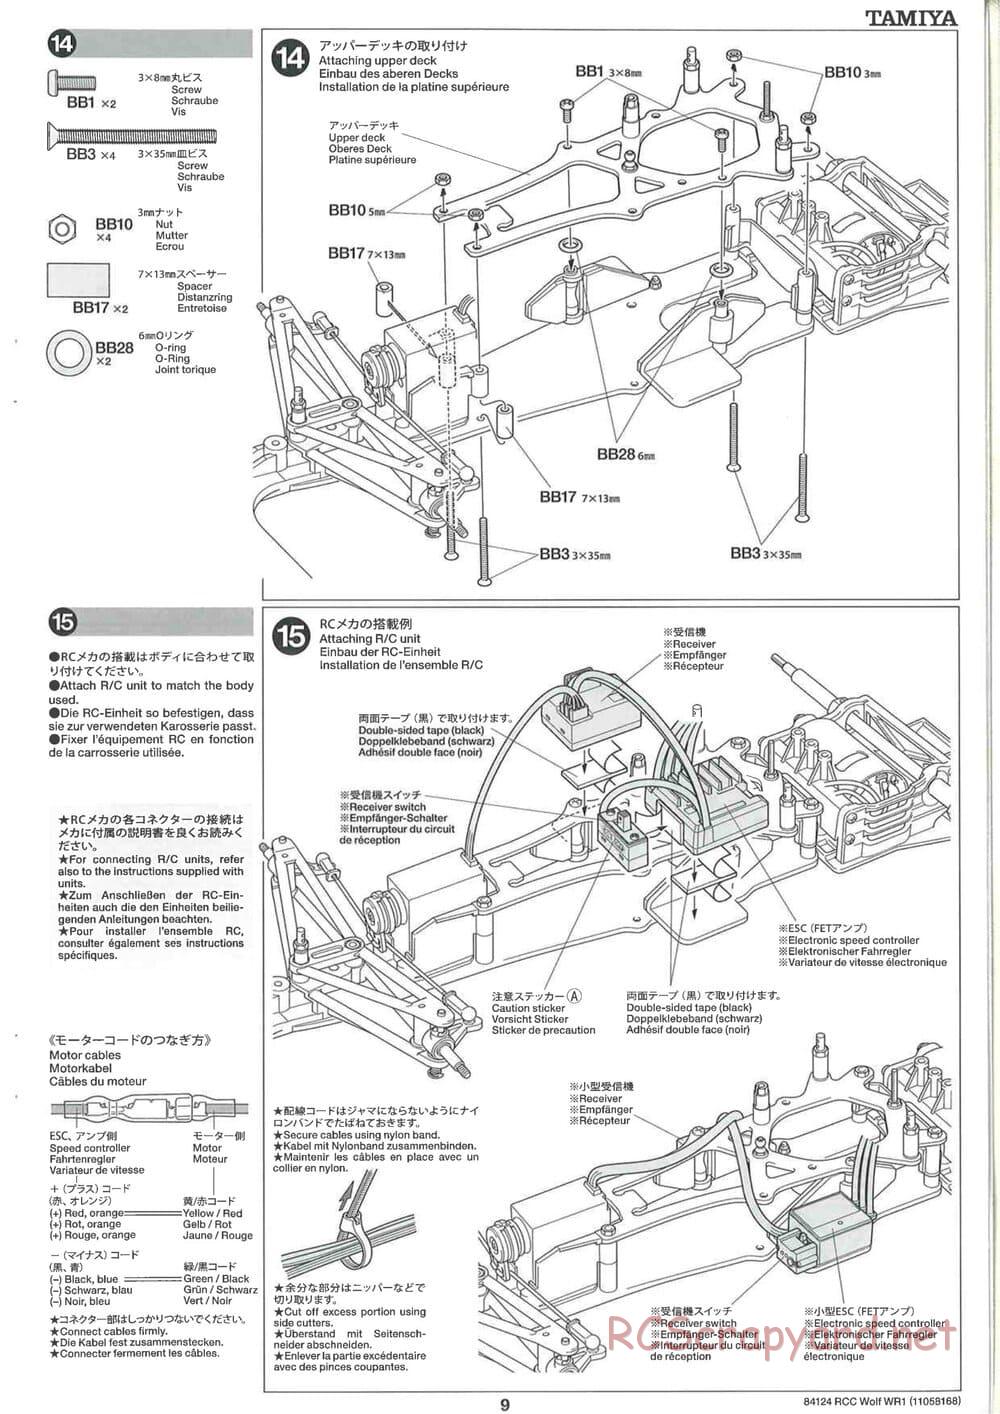 Tamiya - Wolf WR1 - F104W Chassis - Manual - Page 9